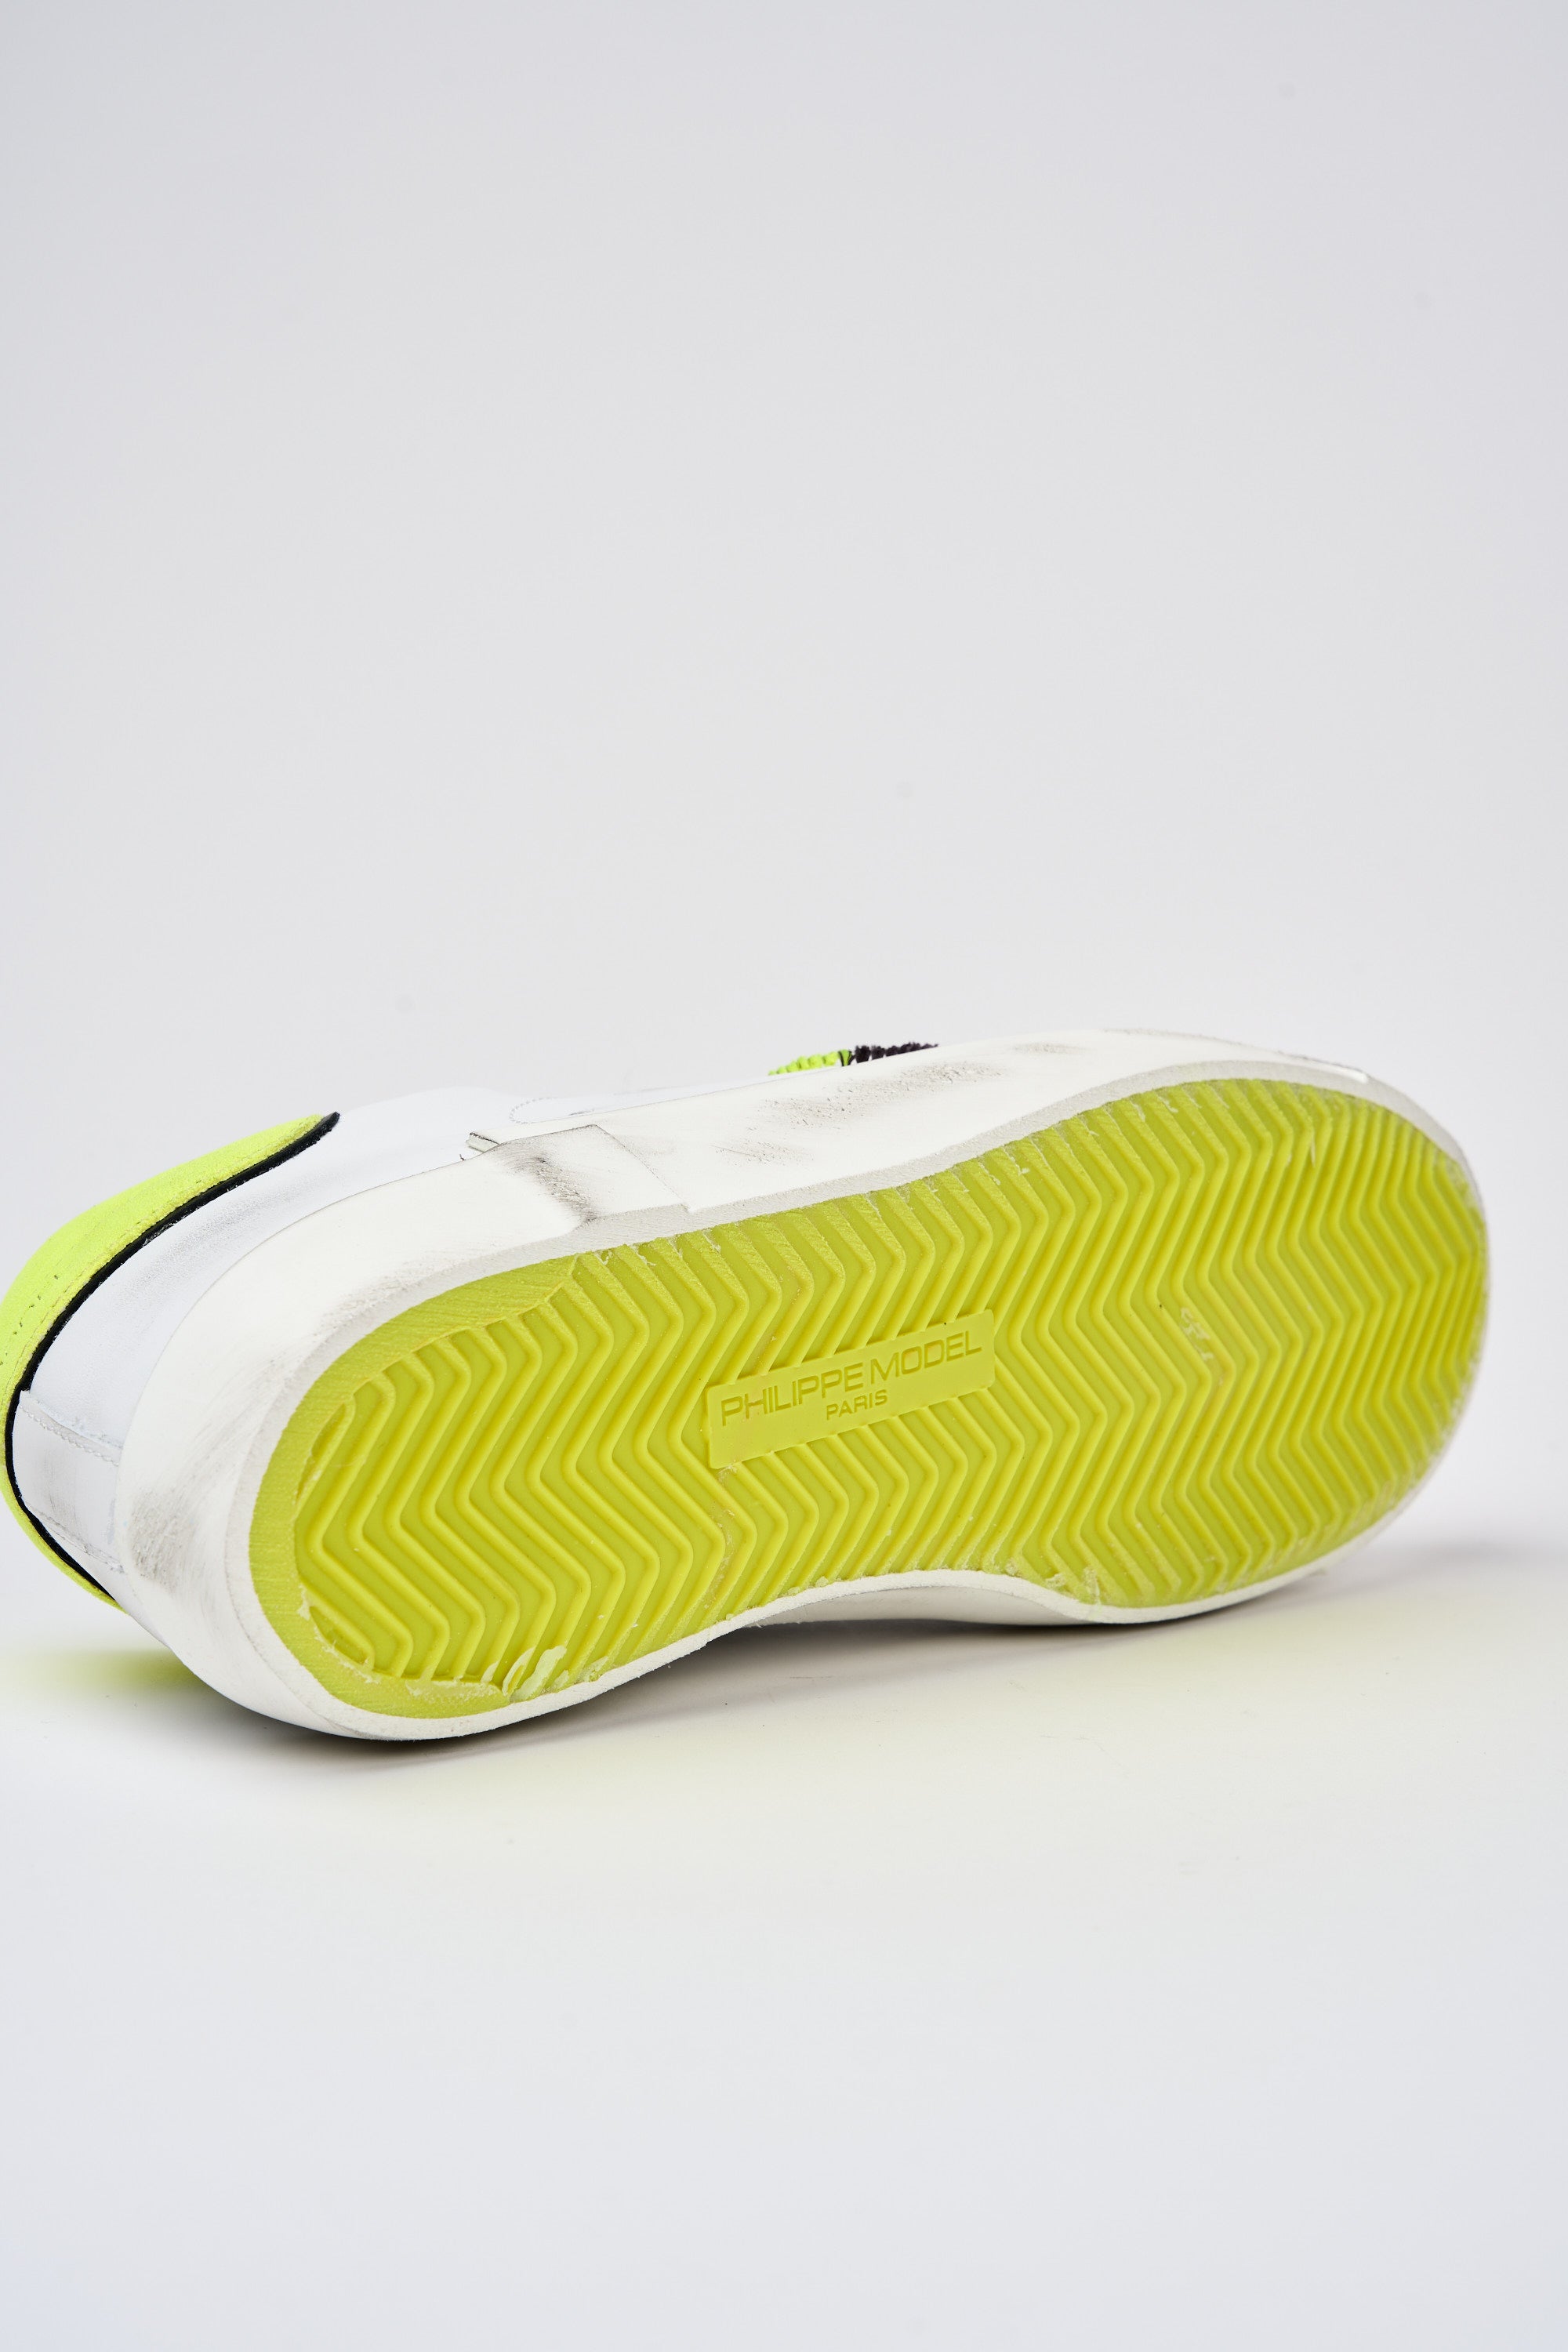 Philippe Model Sneaker Prsx Leder Weiß/Neongelb-5